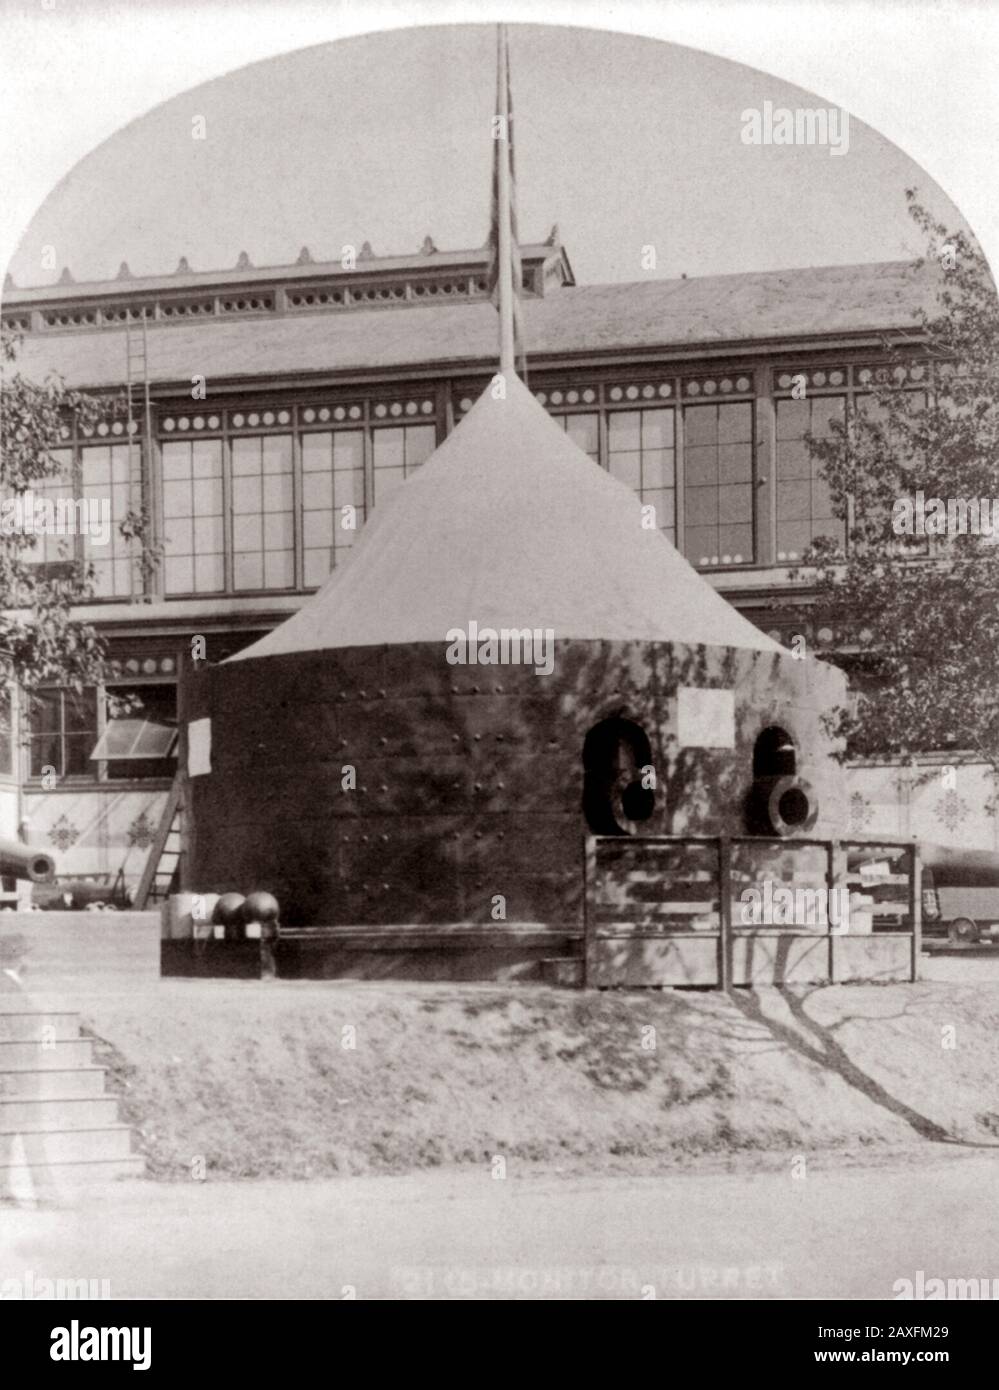 1876 , march , Philadelphia , USA : International Centennial Exhibition, Philadelphia , Pa. The german cannon Krupp Exhibit  monitor turret cannons - Machinery Hall - ARMI - ARMA - FRIEDERICH KRUPP - CANNONE - GUN  -  INDUSTRIA - DINASTIA INDUSTRIALE - FABBRICA - ARCHITETTURA - ARCHITECTURE  - HISTORY -  foto storica - INDUSTRY - INDUSTRIA BELLICA -  ESPOSIZIONE UNIVERSALE FILADELFIA  ---- ARCHIVIO GBB Stock Photo